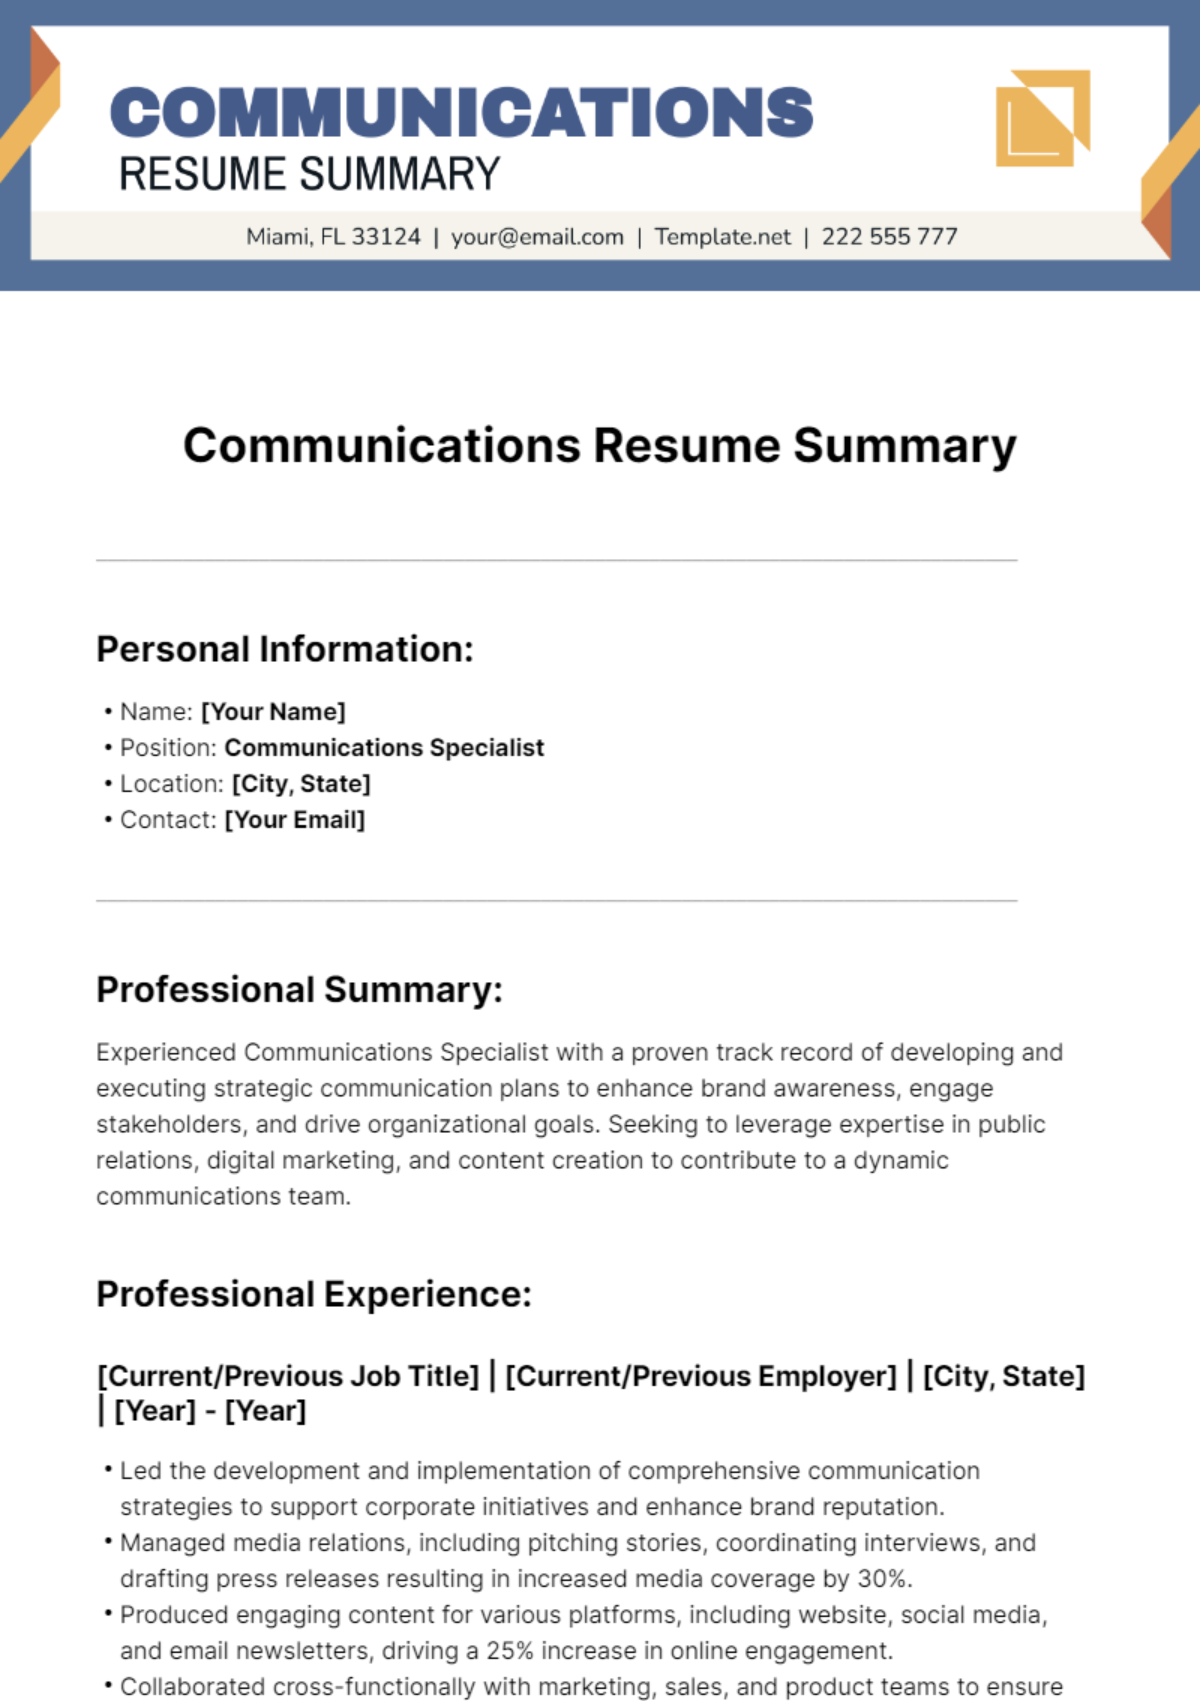 Communications Resume Summary Template